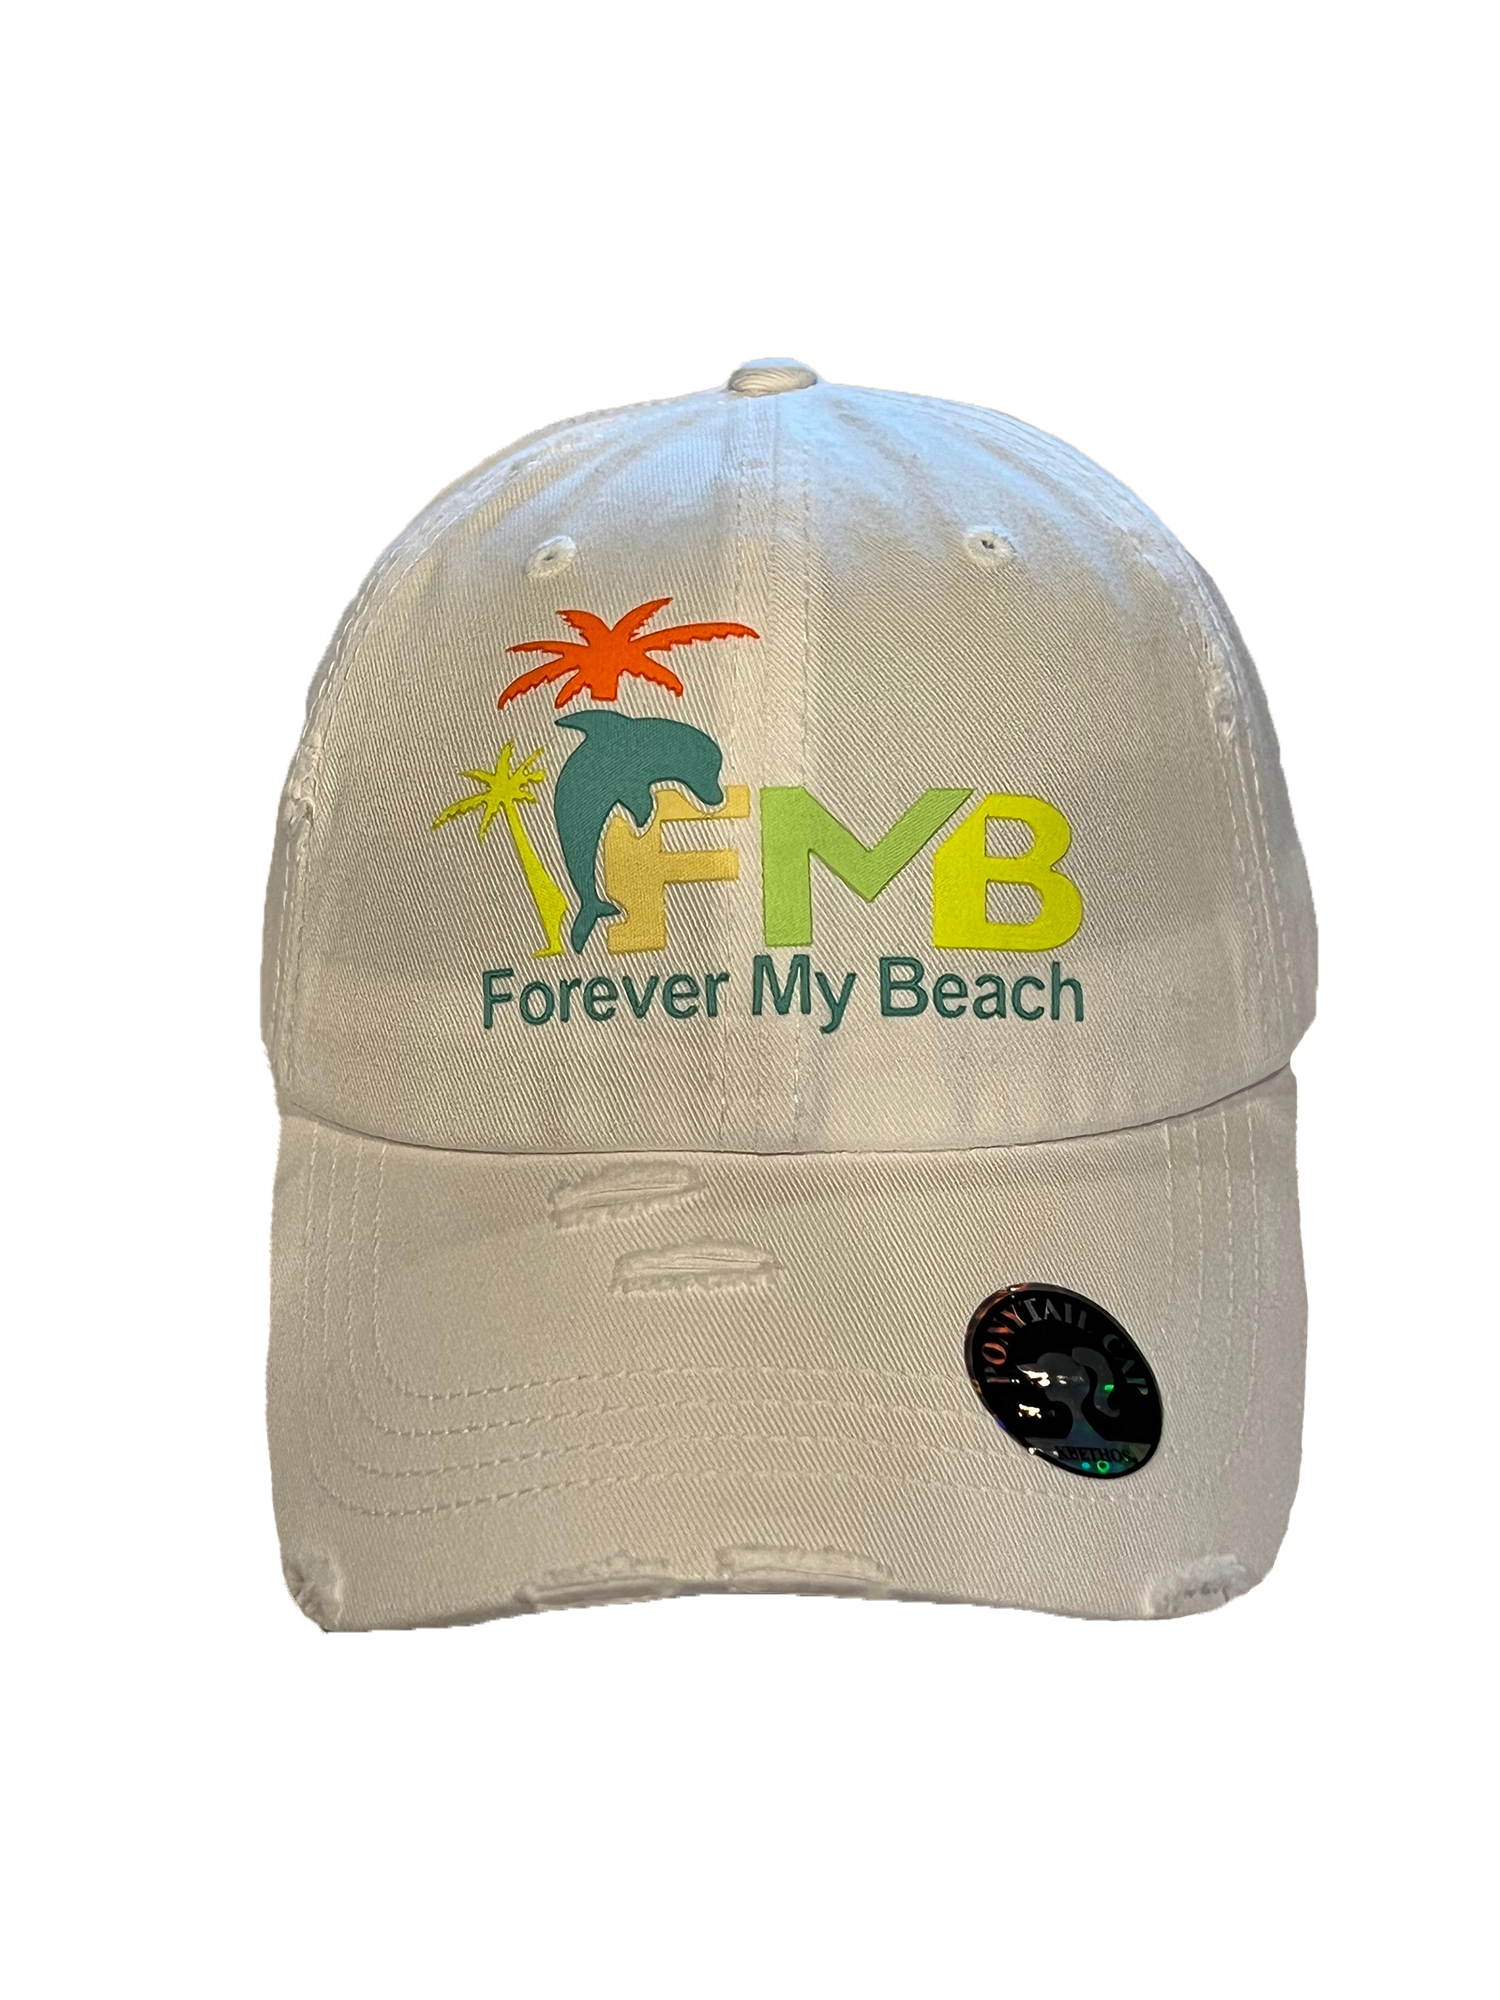 Fort Myers Beach Forever My Beach